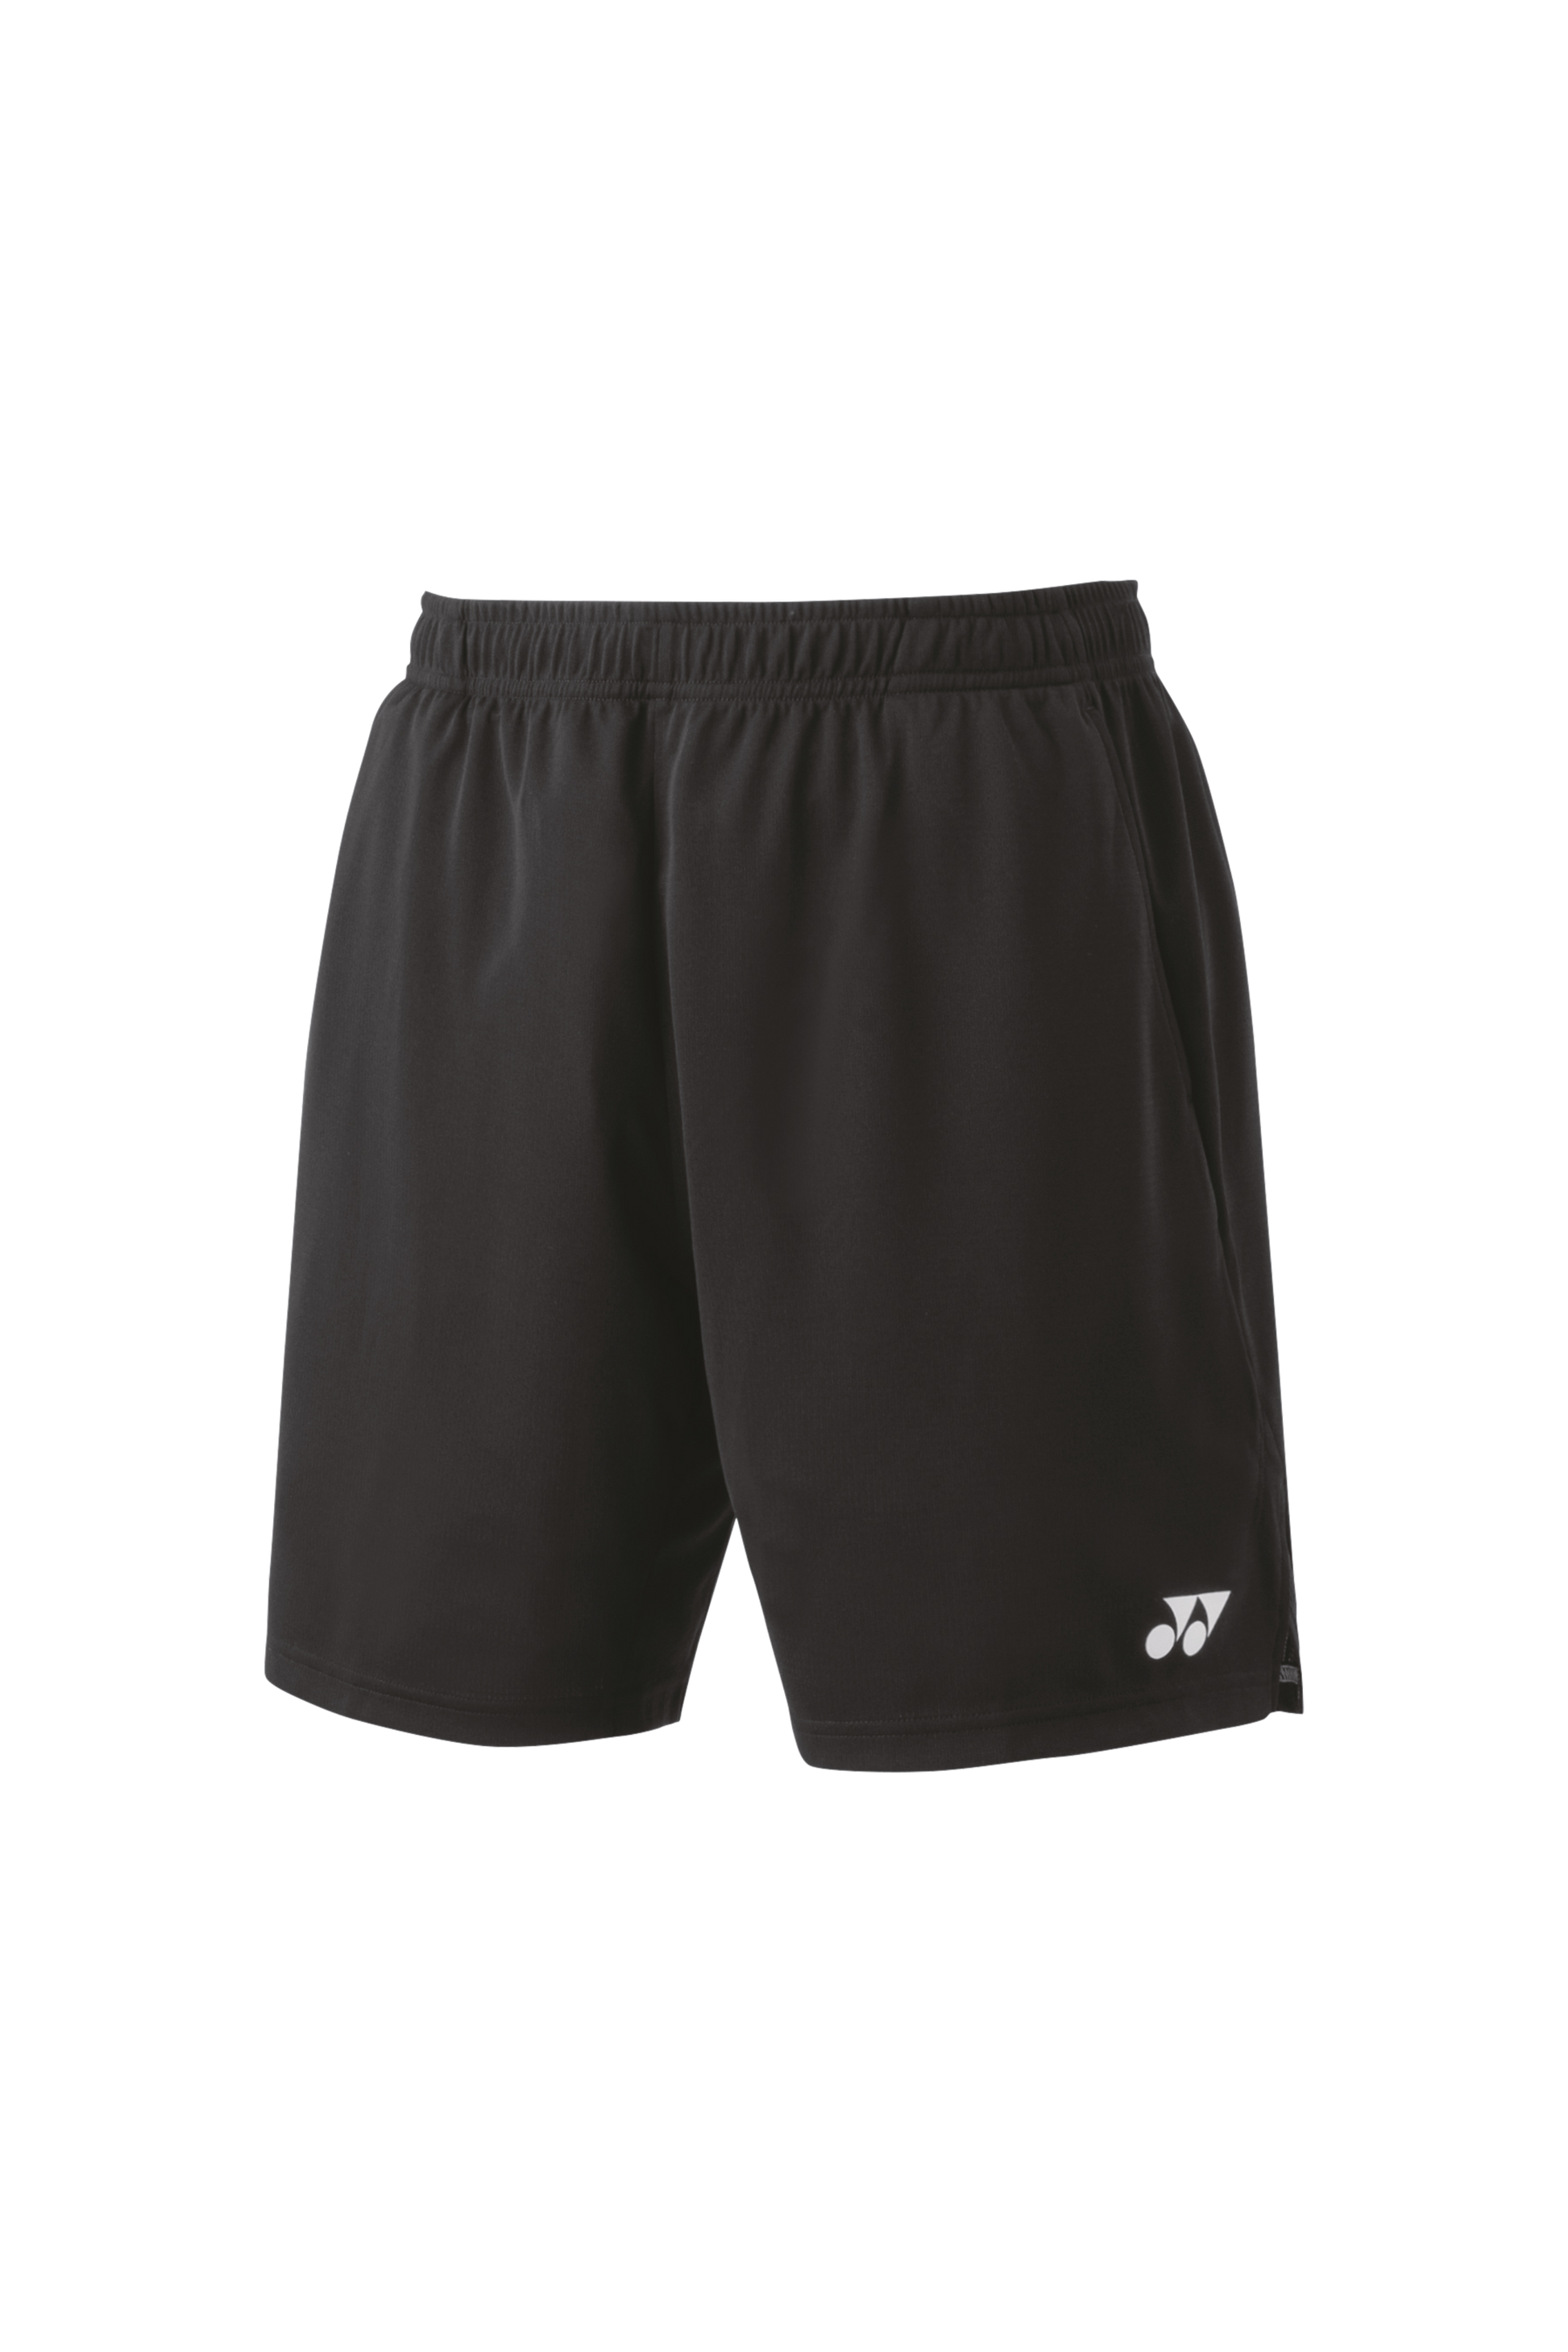 YONEX Men's Knit Shorts 15170 - Max Sports